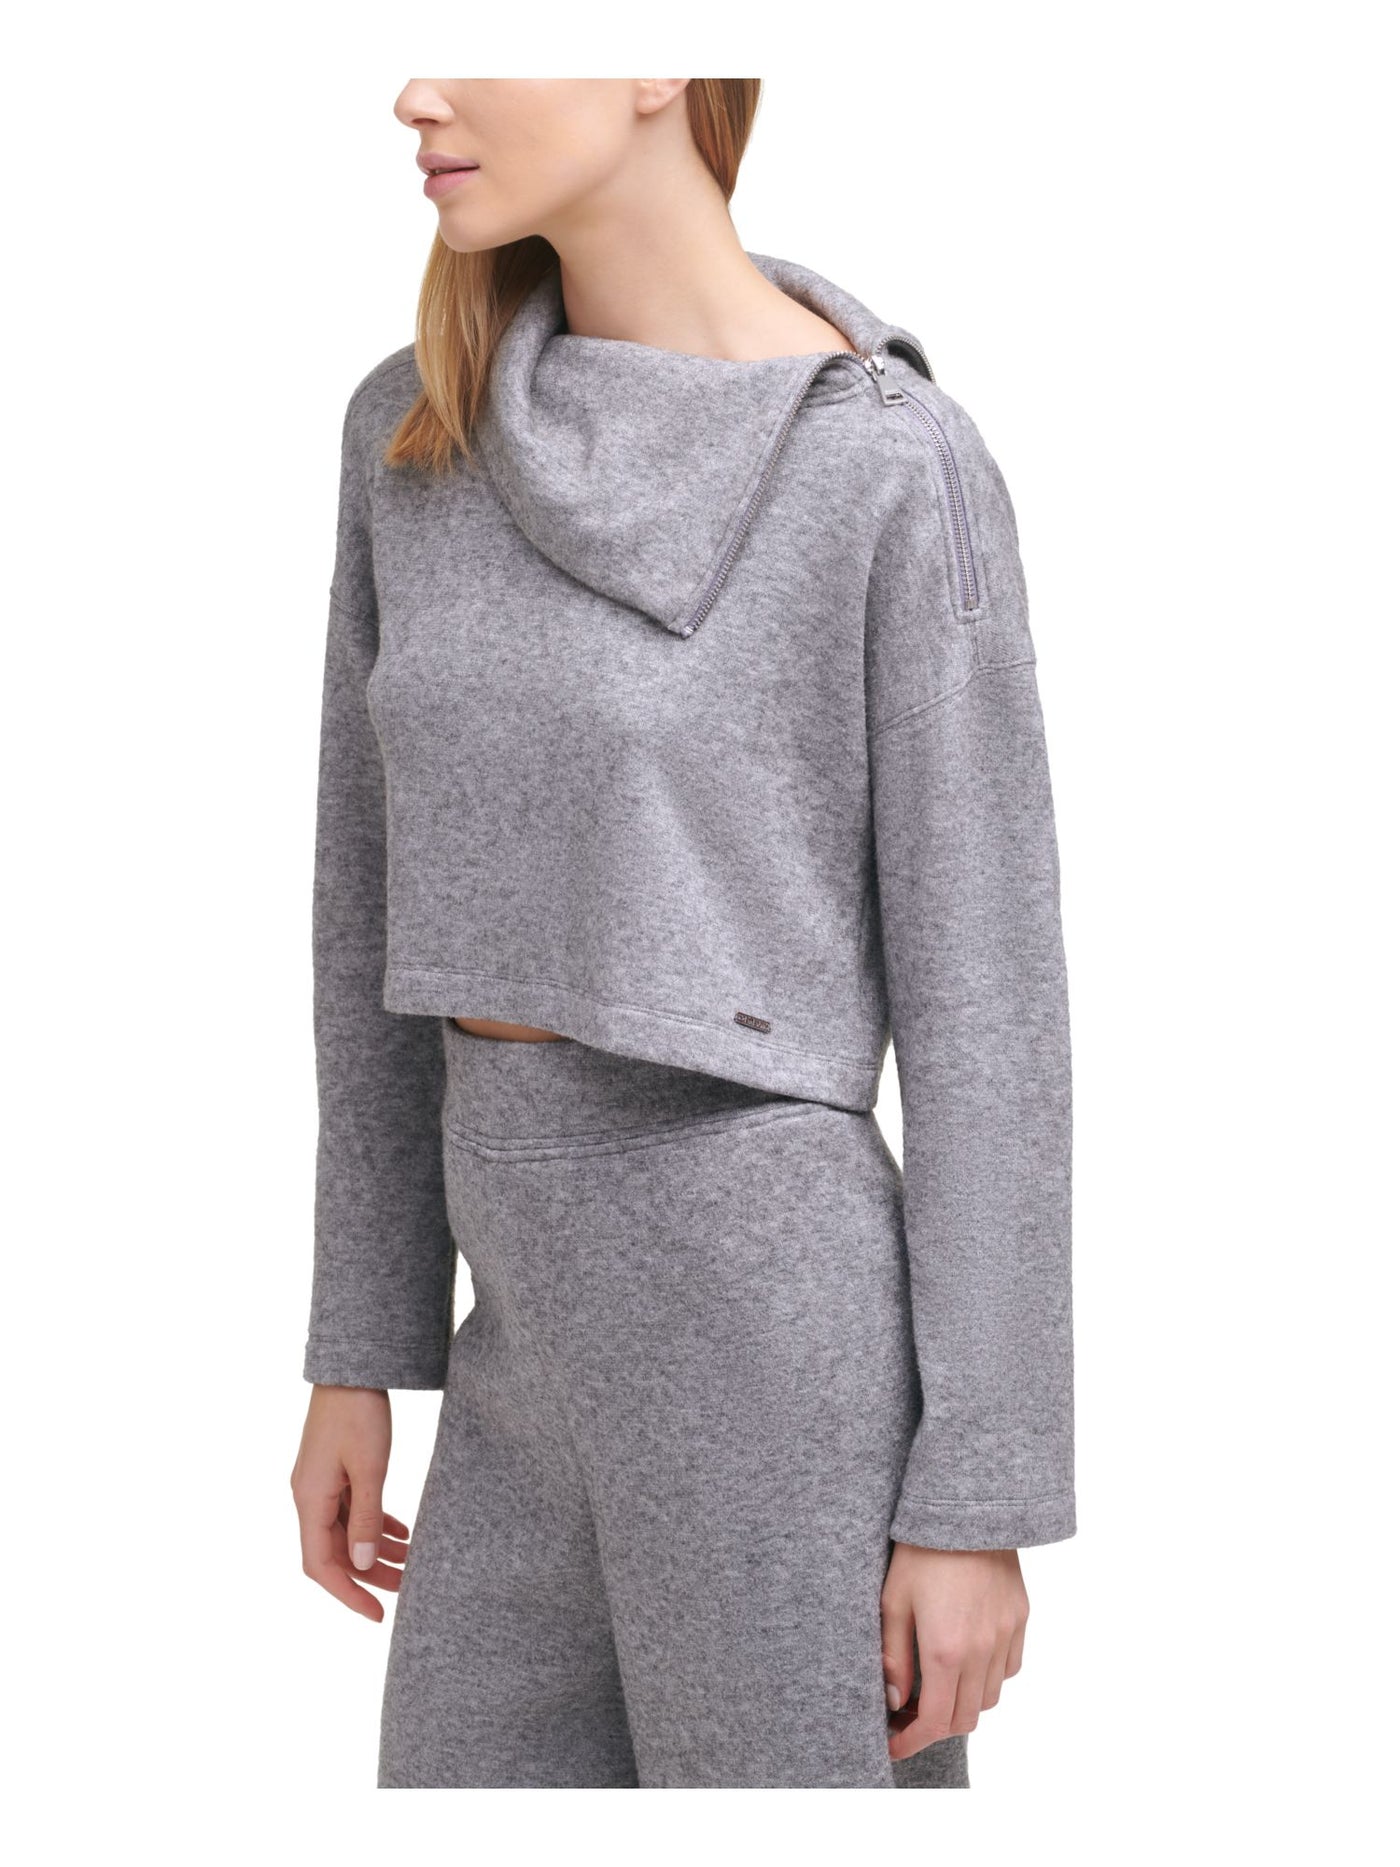 DKNY Womens Gray Heather Long Sleeve Top XL